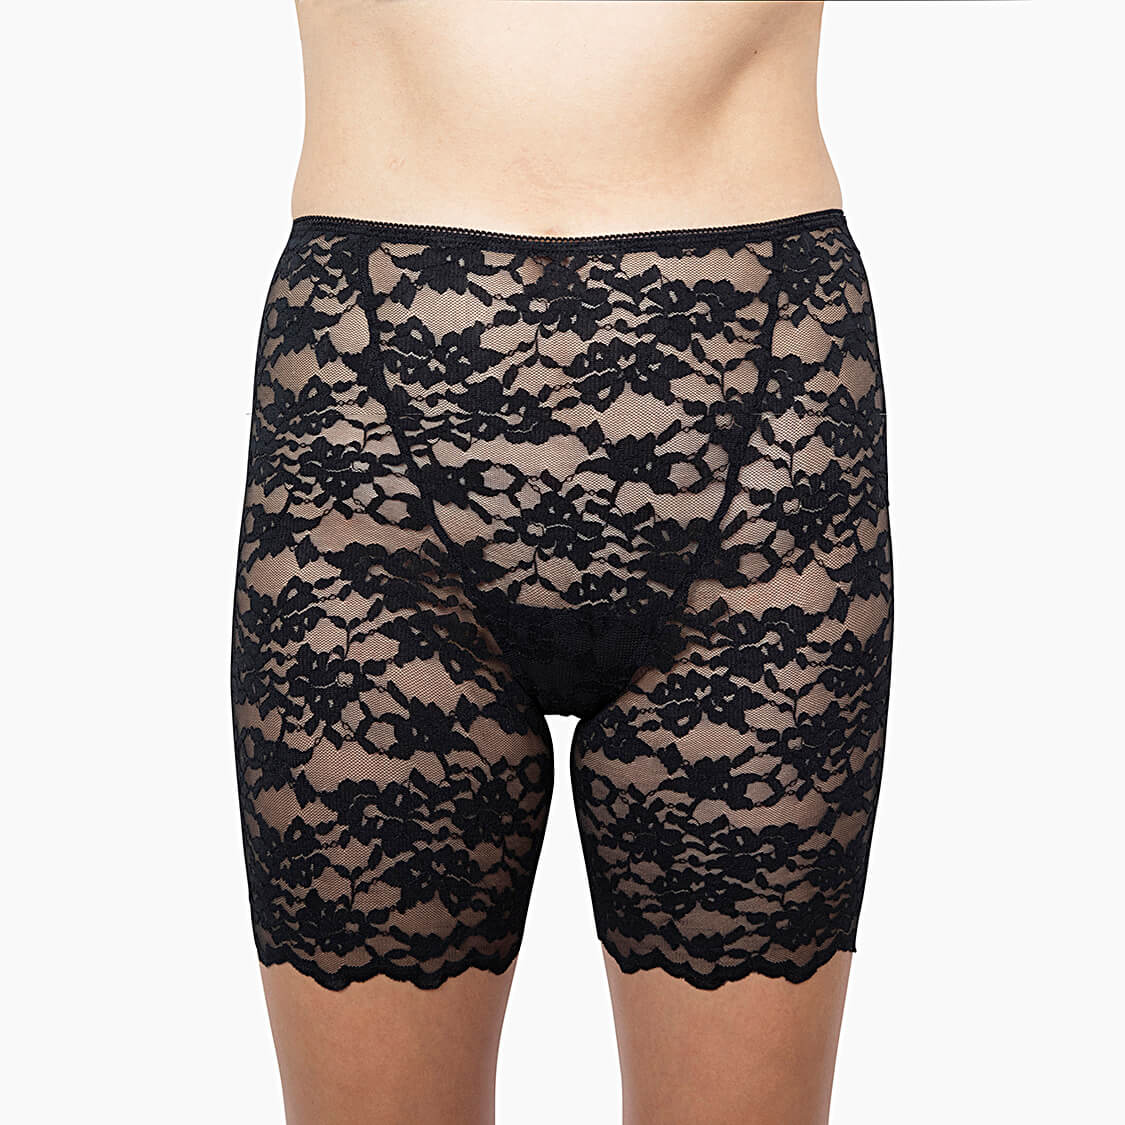 Inevnen Slip Shorts for Under Dresses Women Anti Chafing Underwear Lace See  Through Mesh Sheer Biker Shorts